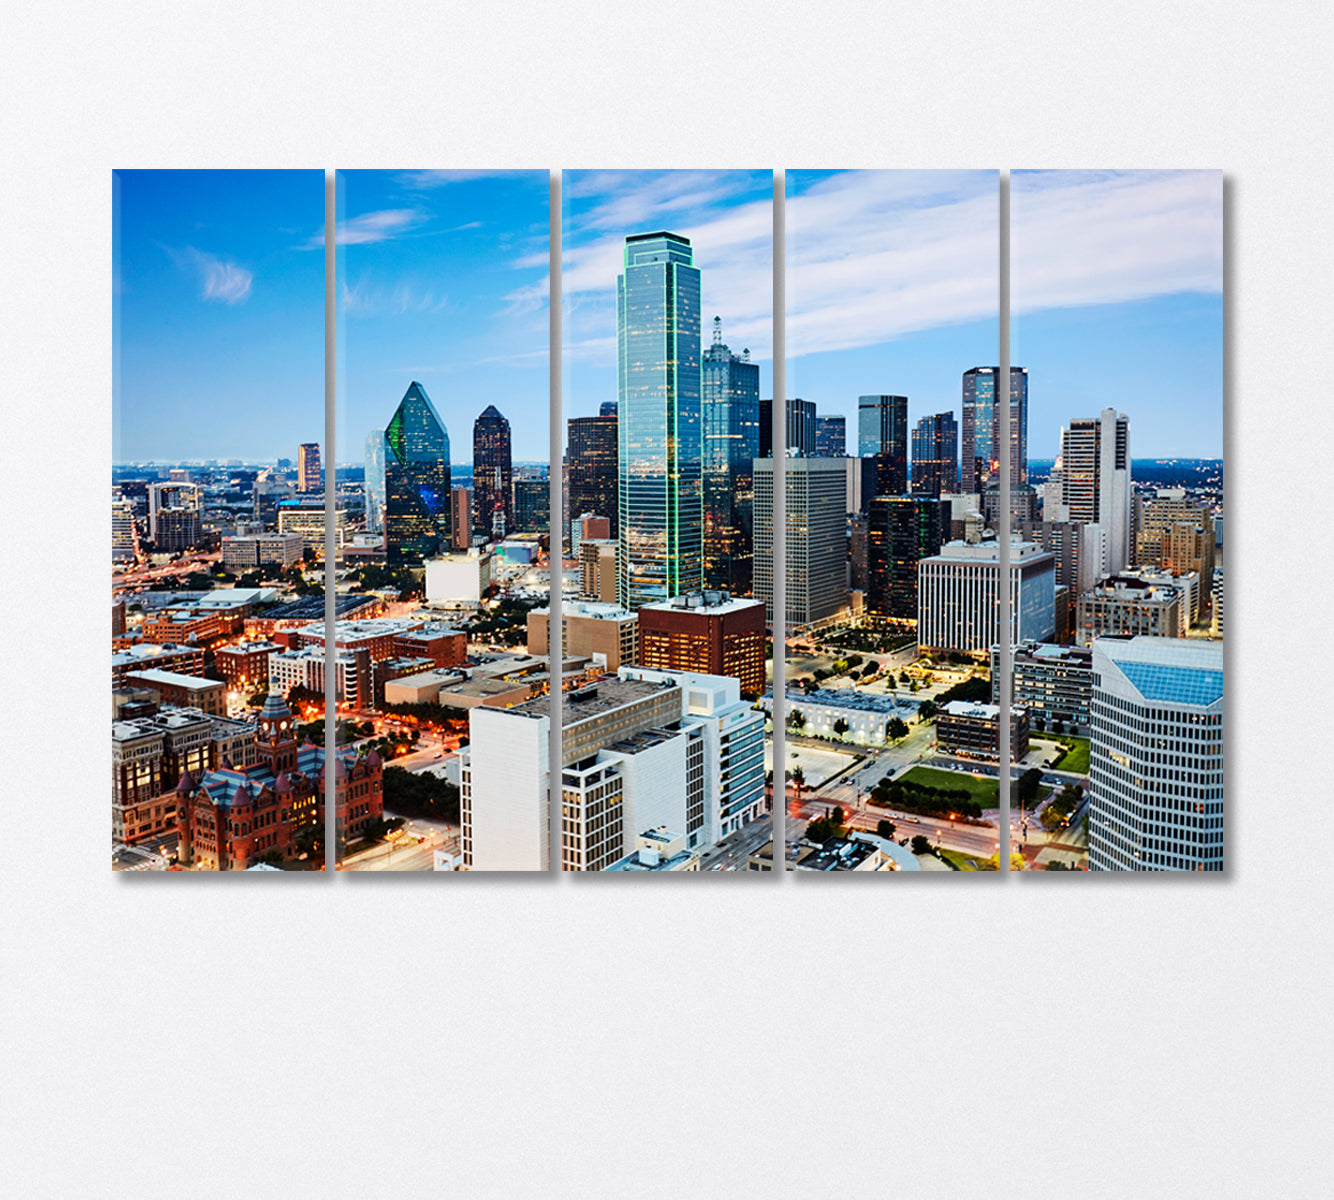 Dallas Financial Center USA Canvas Print-Canvas Print-CetArt-5 Panels-36x24 inches-CetArt